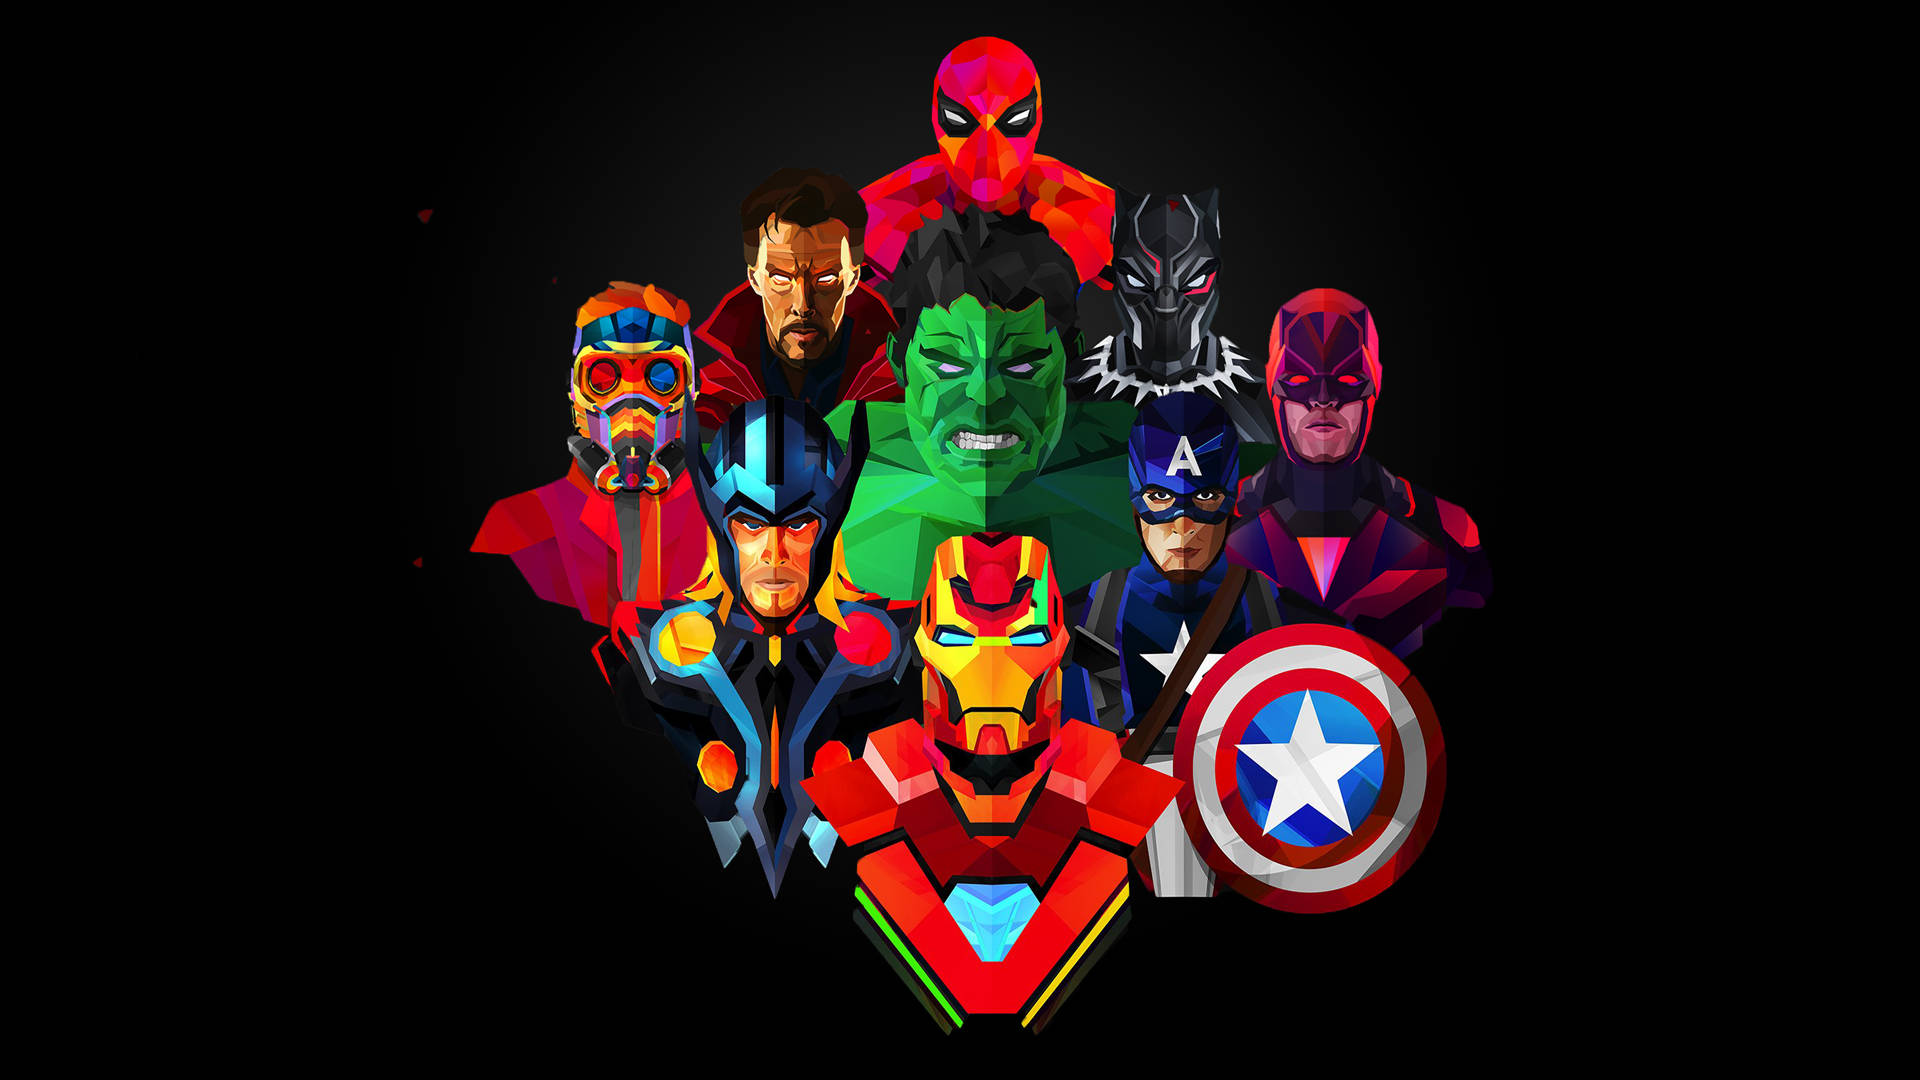 Polygon Art Avengers